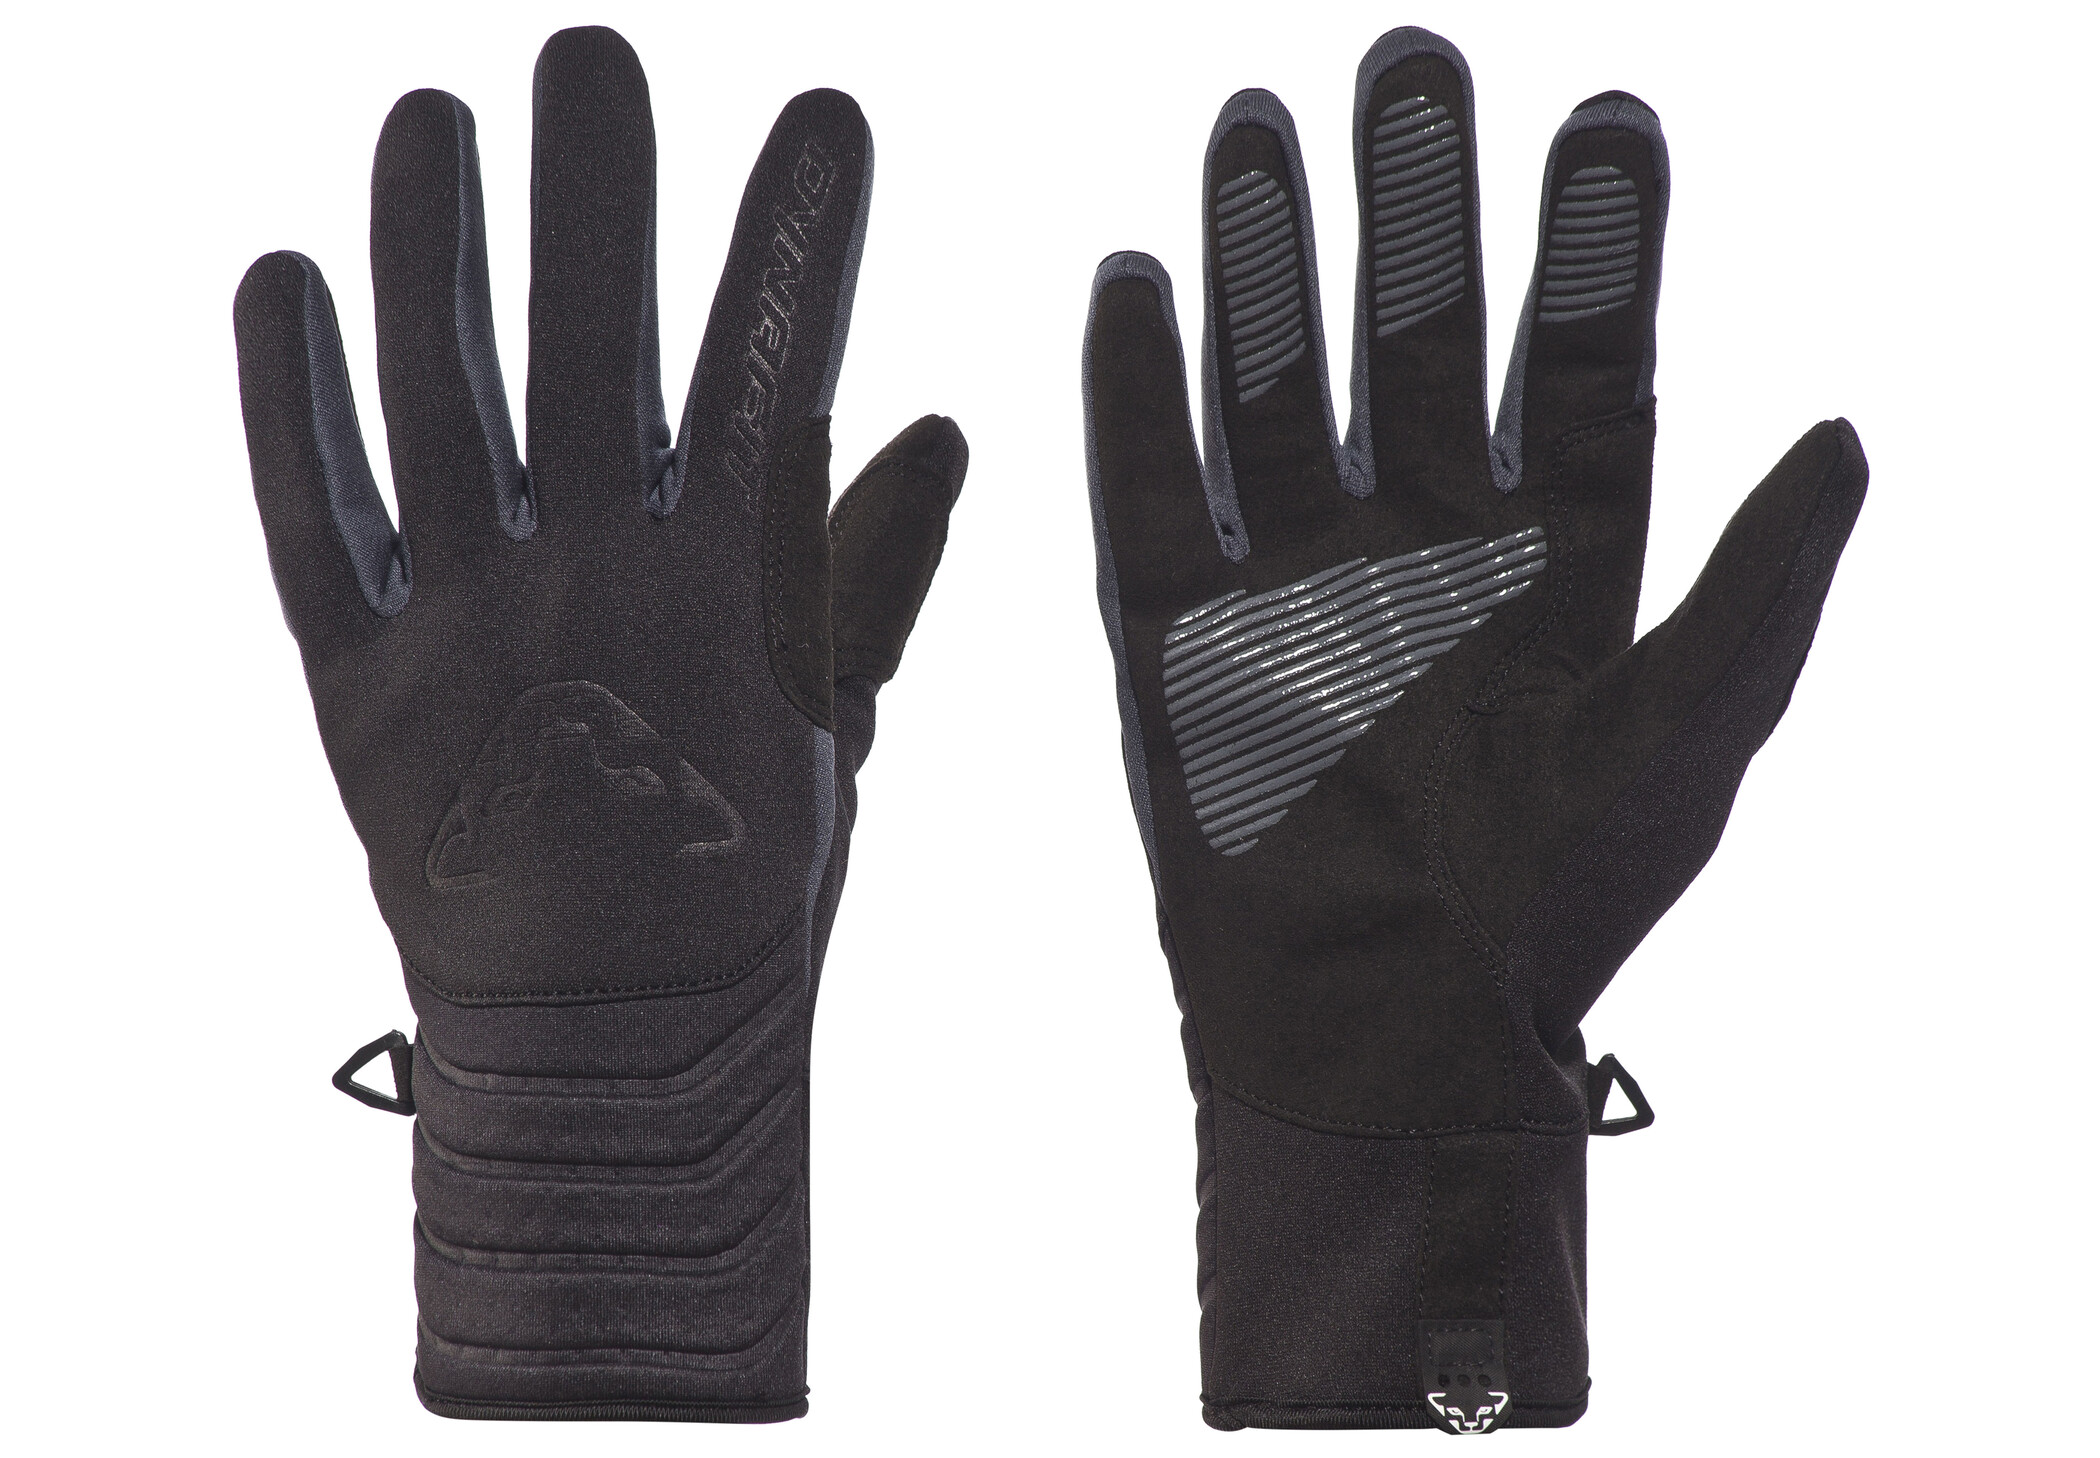 Dynafit Racing Handschuhe schwarz